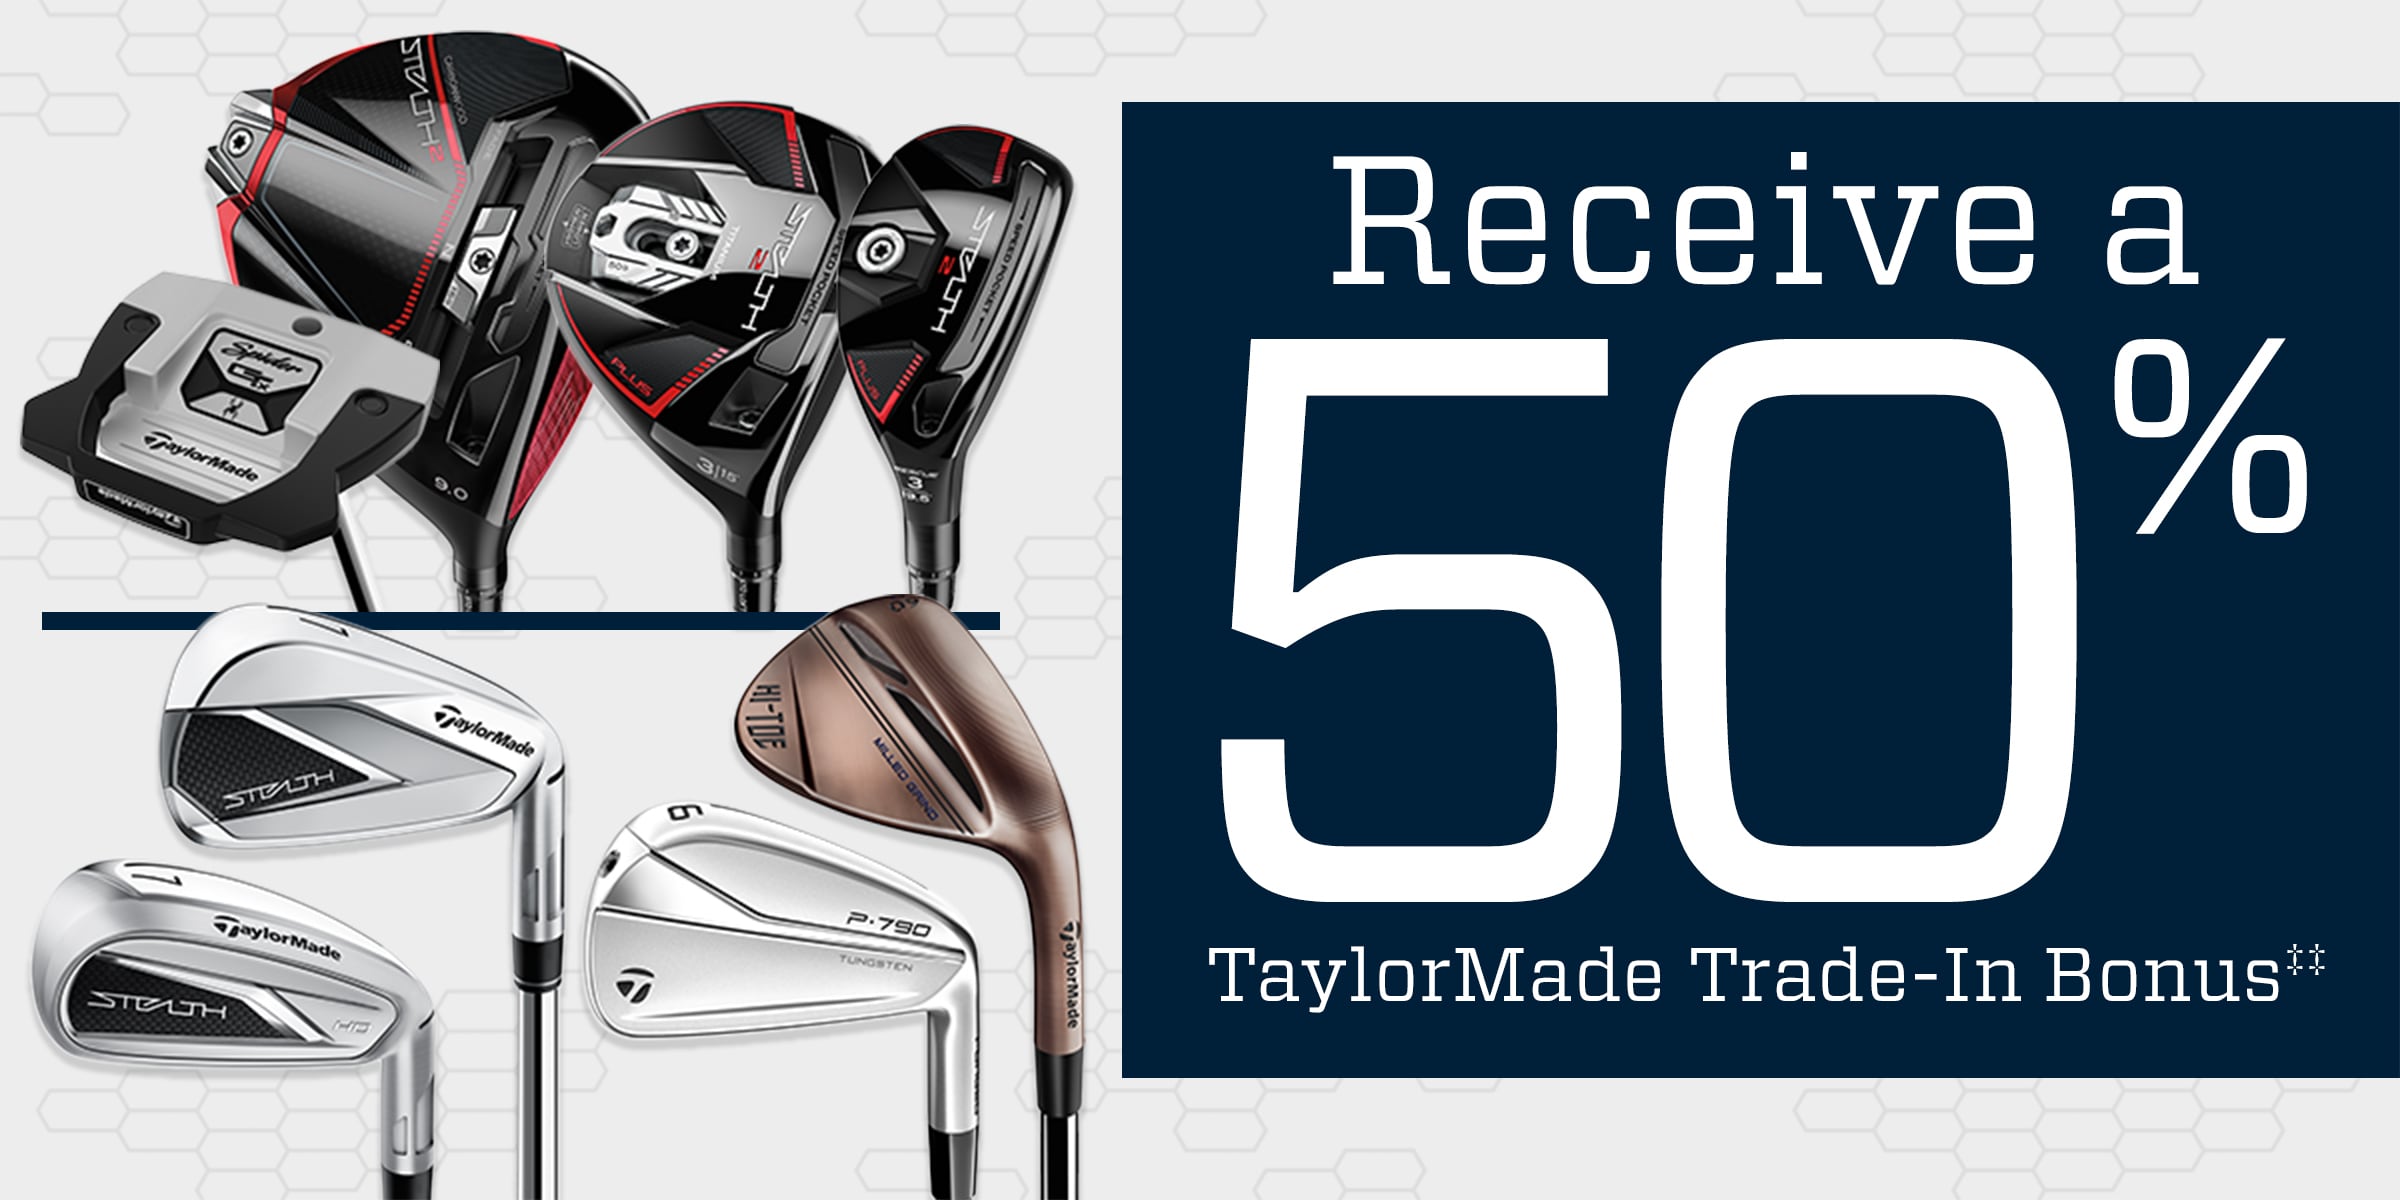  Receive a 50% TaylorMade Trade-In Bonus‡‡